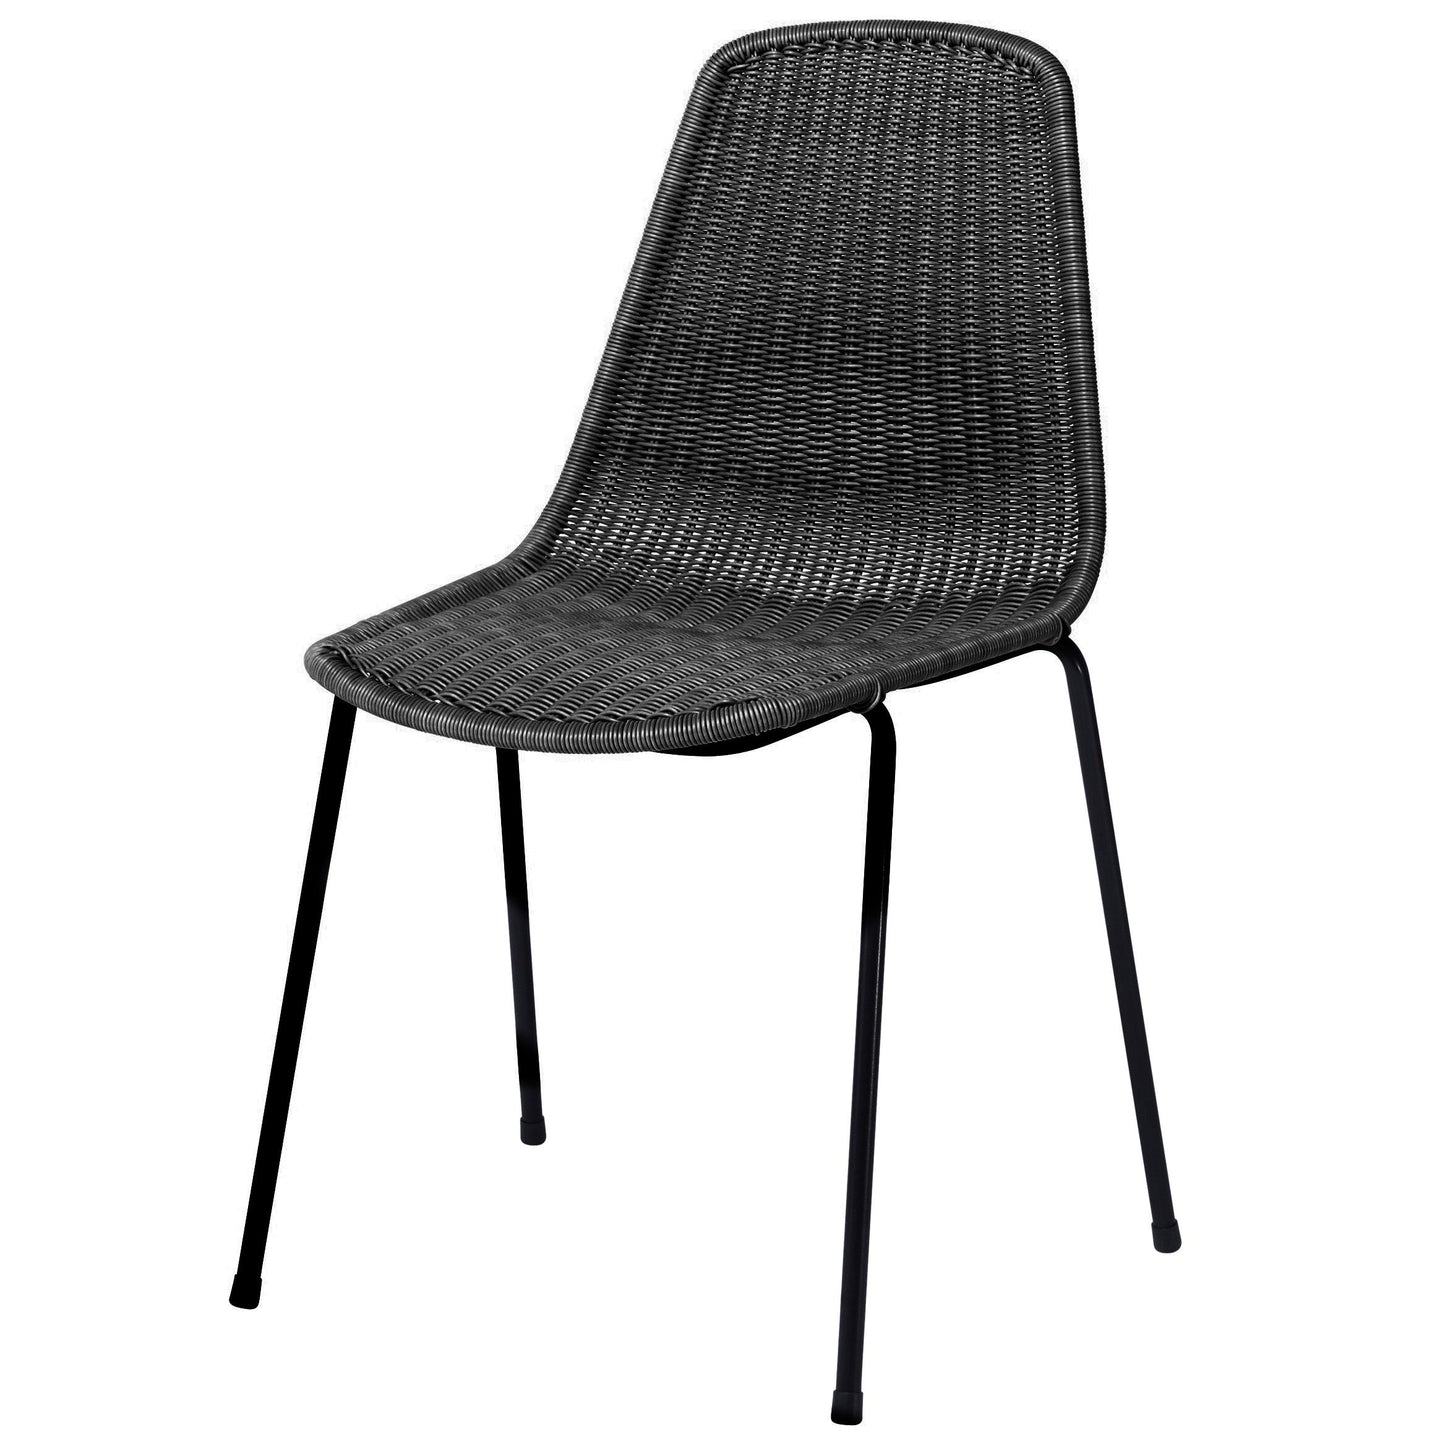 Charcoal Black Rattan "Basket" Dining Chair